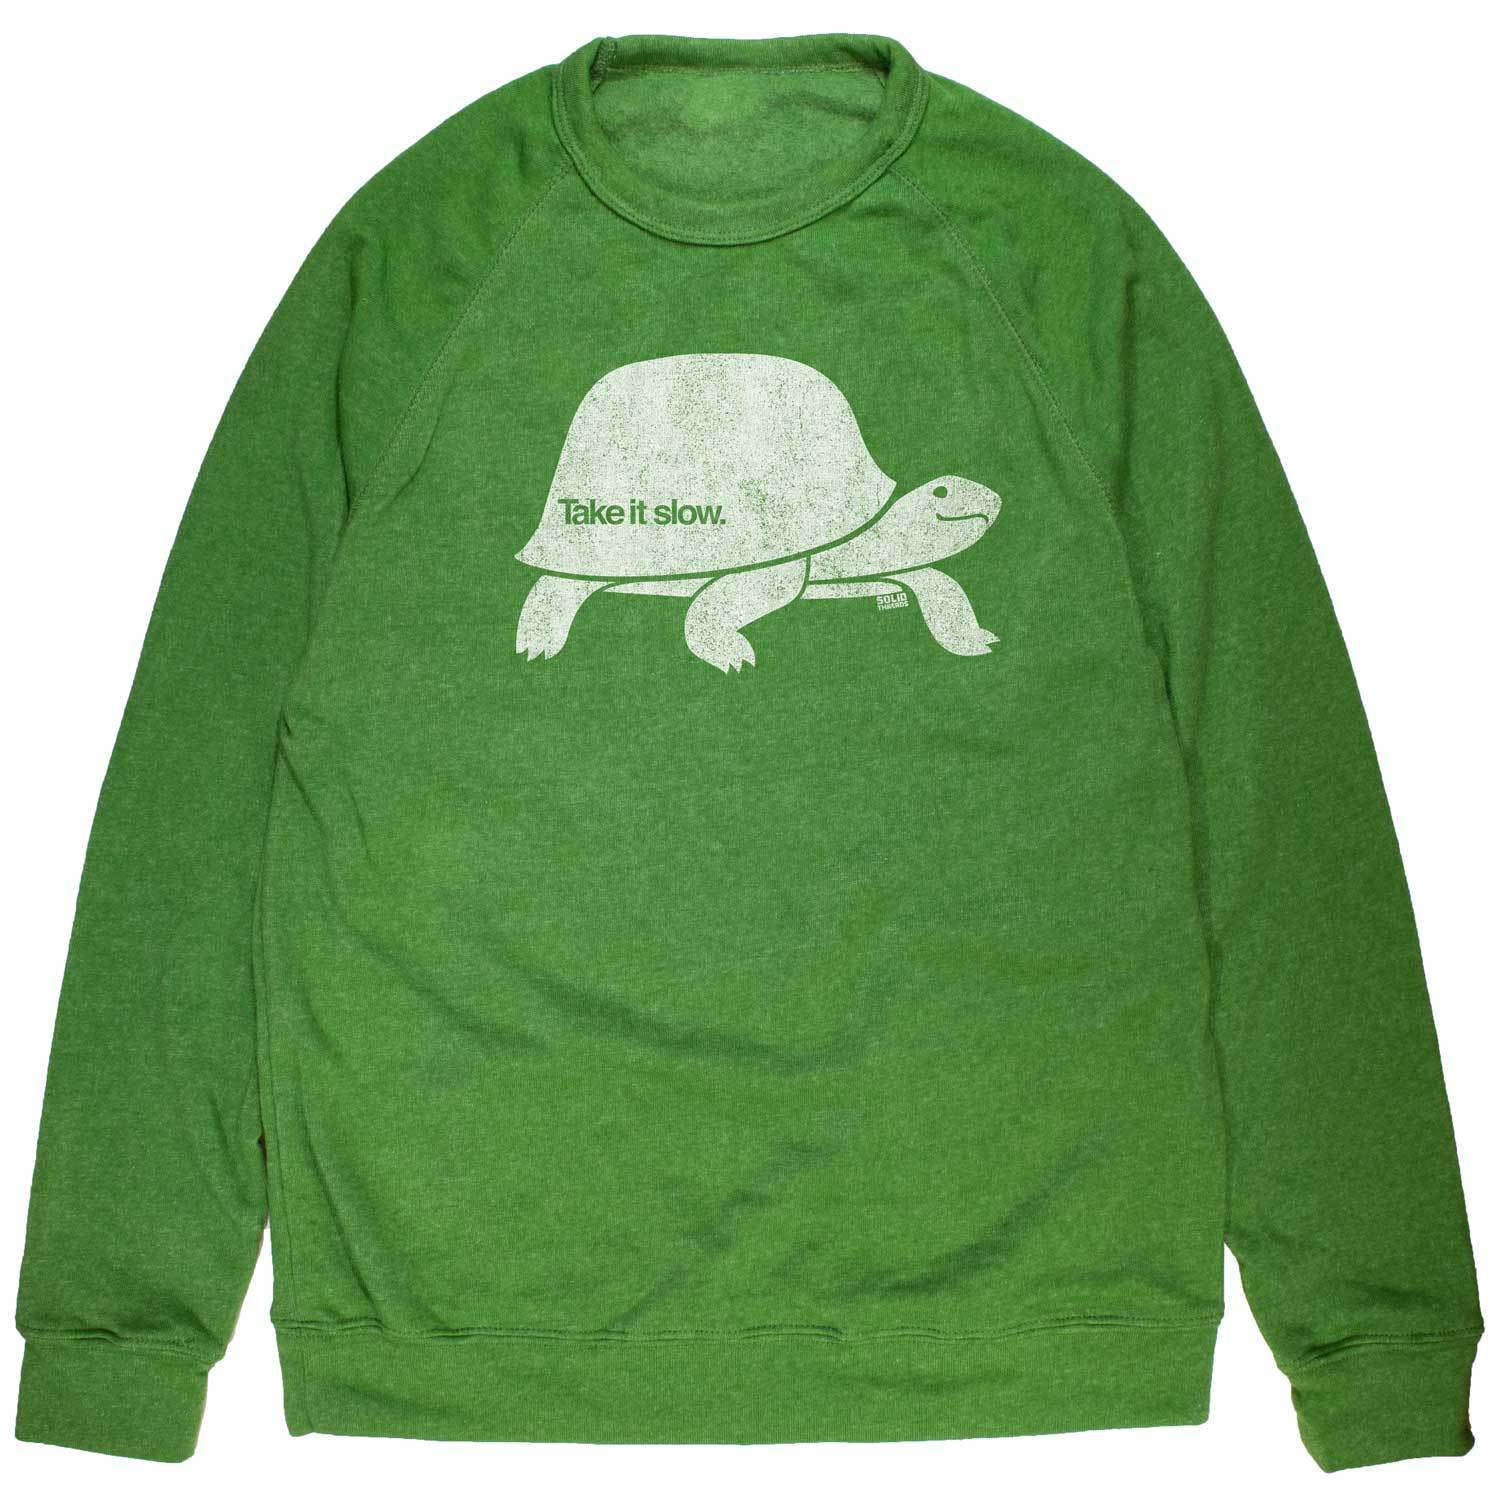 Take It Slow Vintage Inspired Fleece Crewneck Sweatshirt with funny turtle graphic | Solid Threads